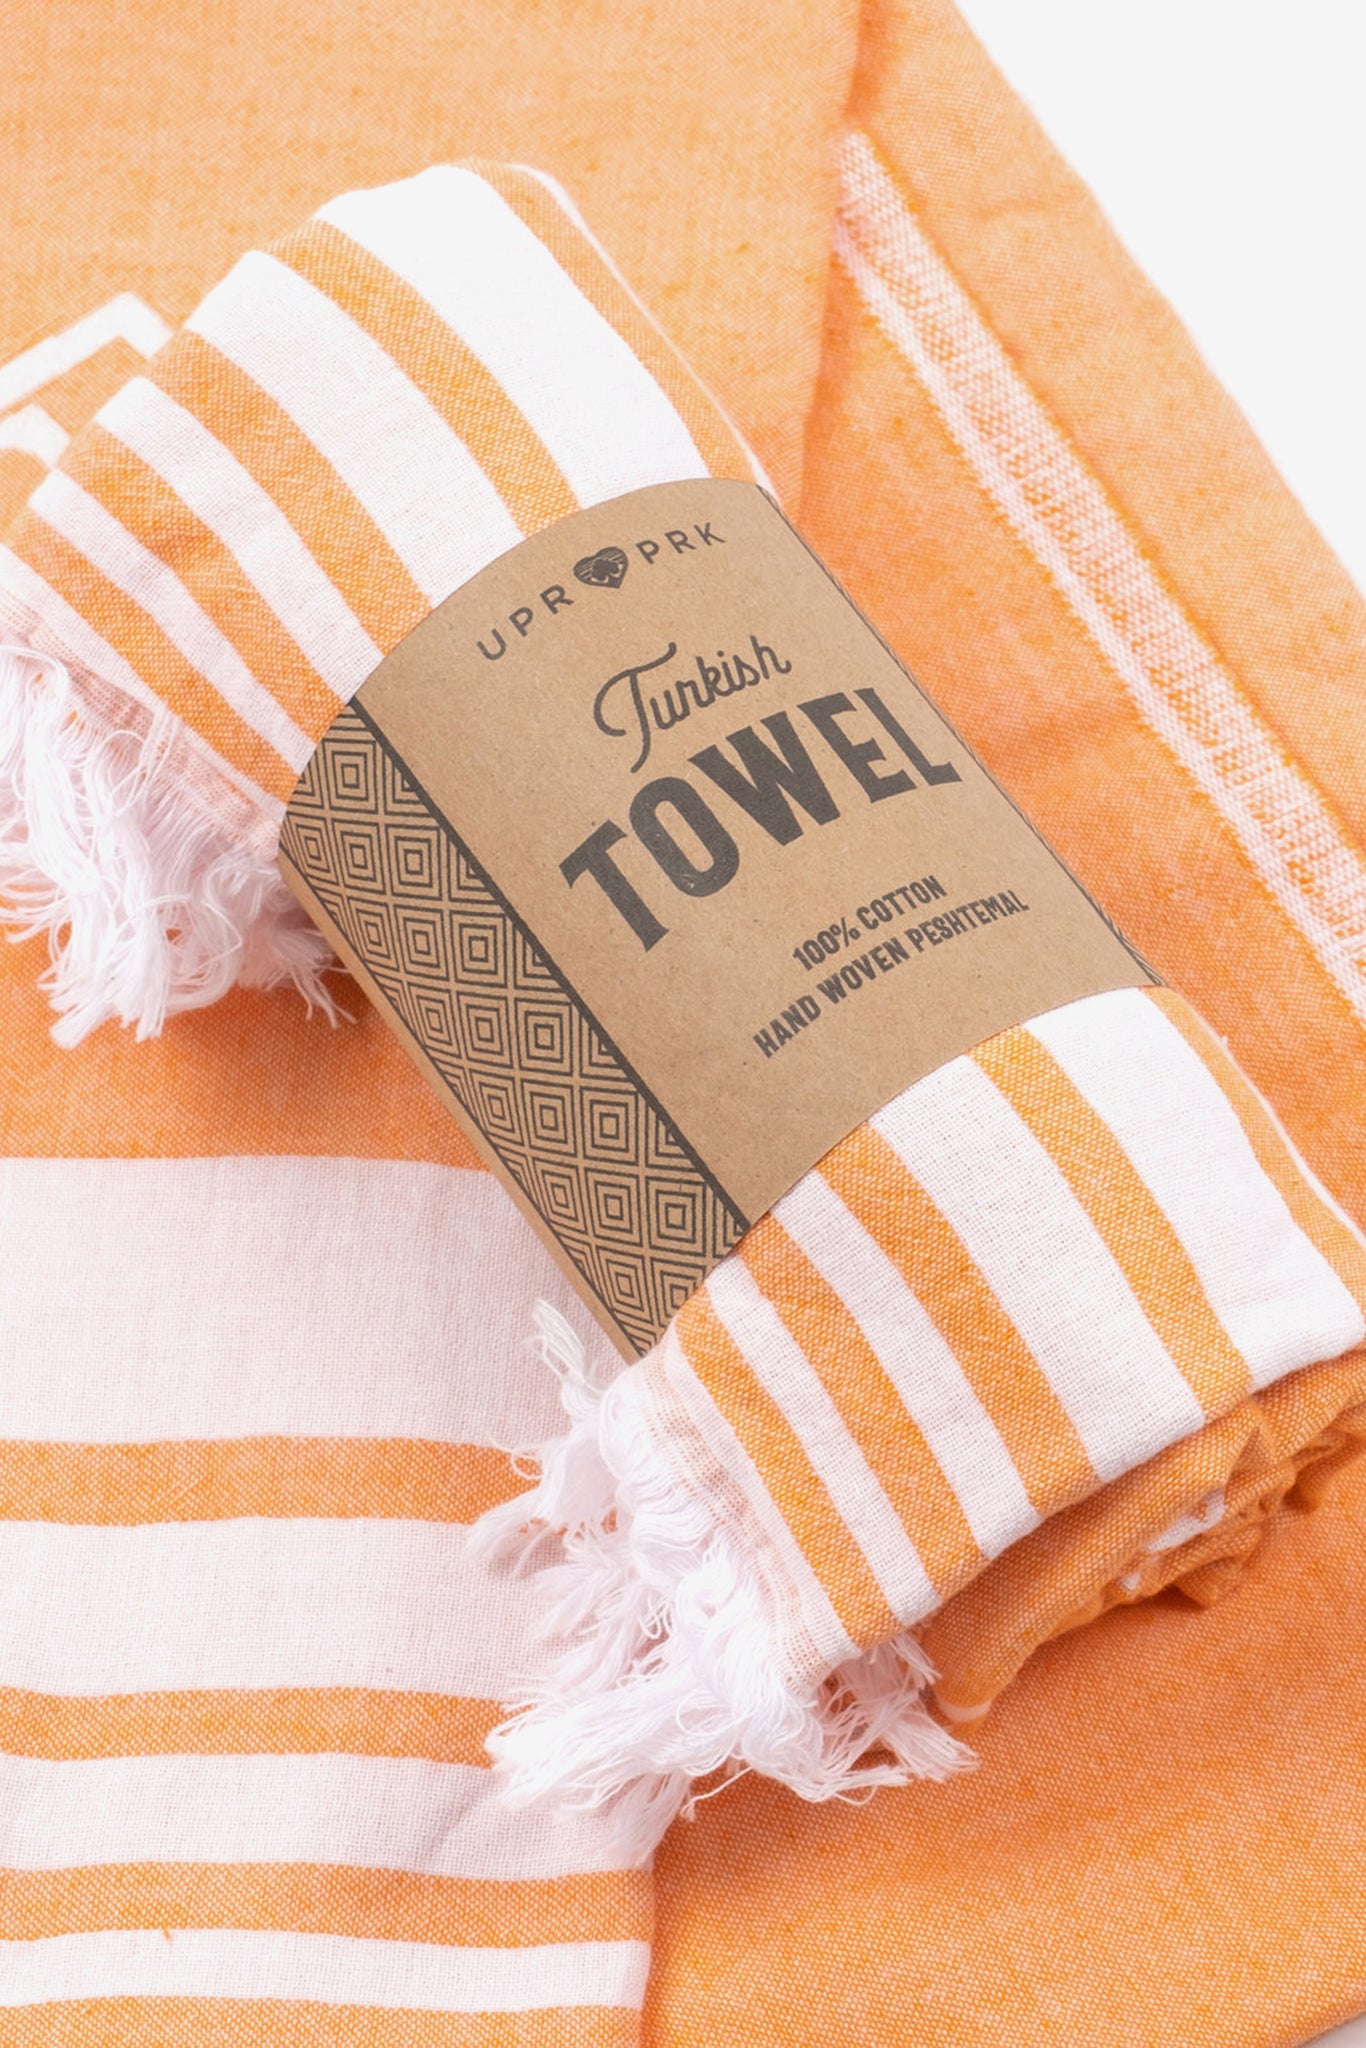 XL Turkish Towels beach towels, bath towel Peshtemal 100%Cotton, Beach Towel